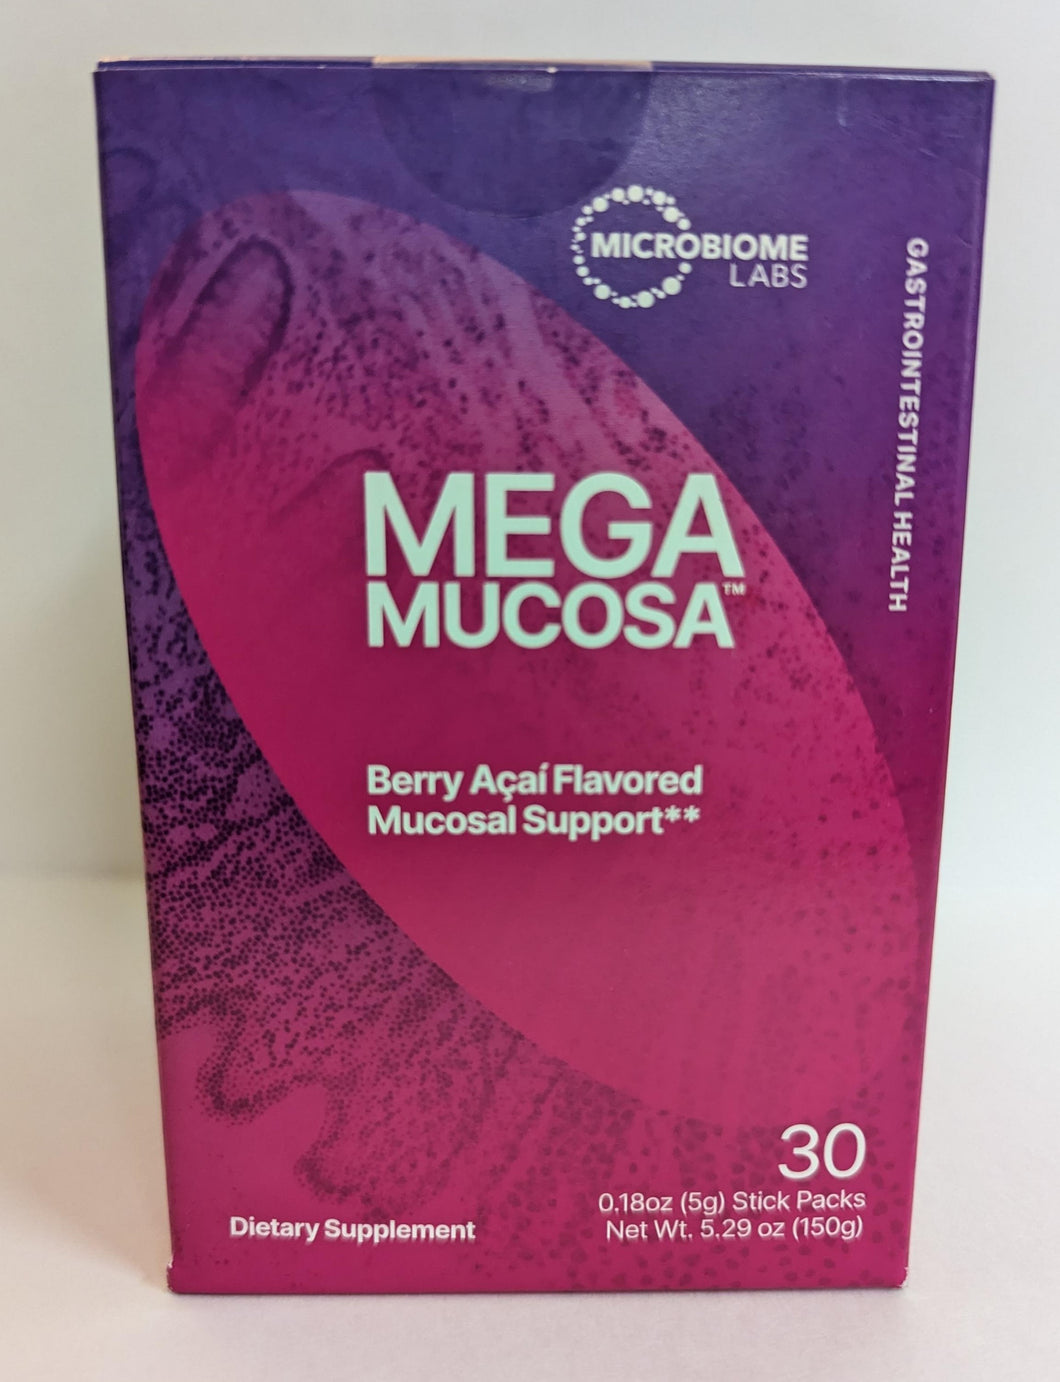 Microbiome Labs MegaMucosa Stick Packs